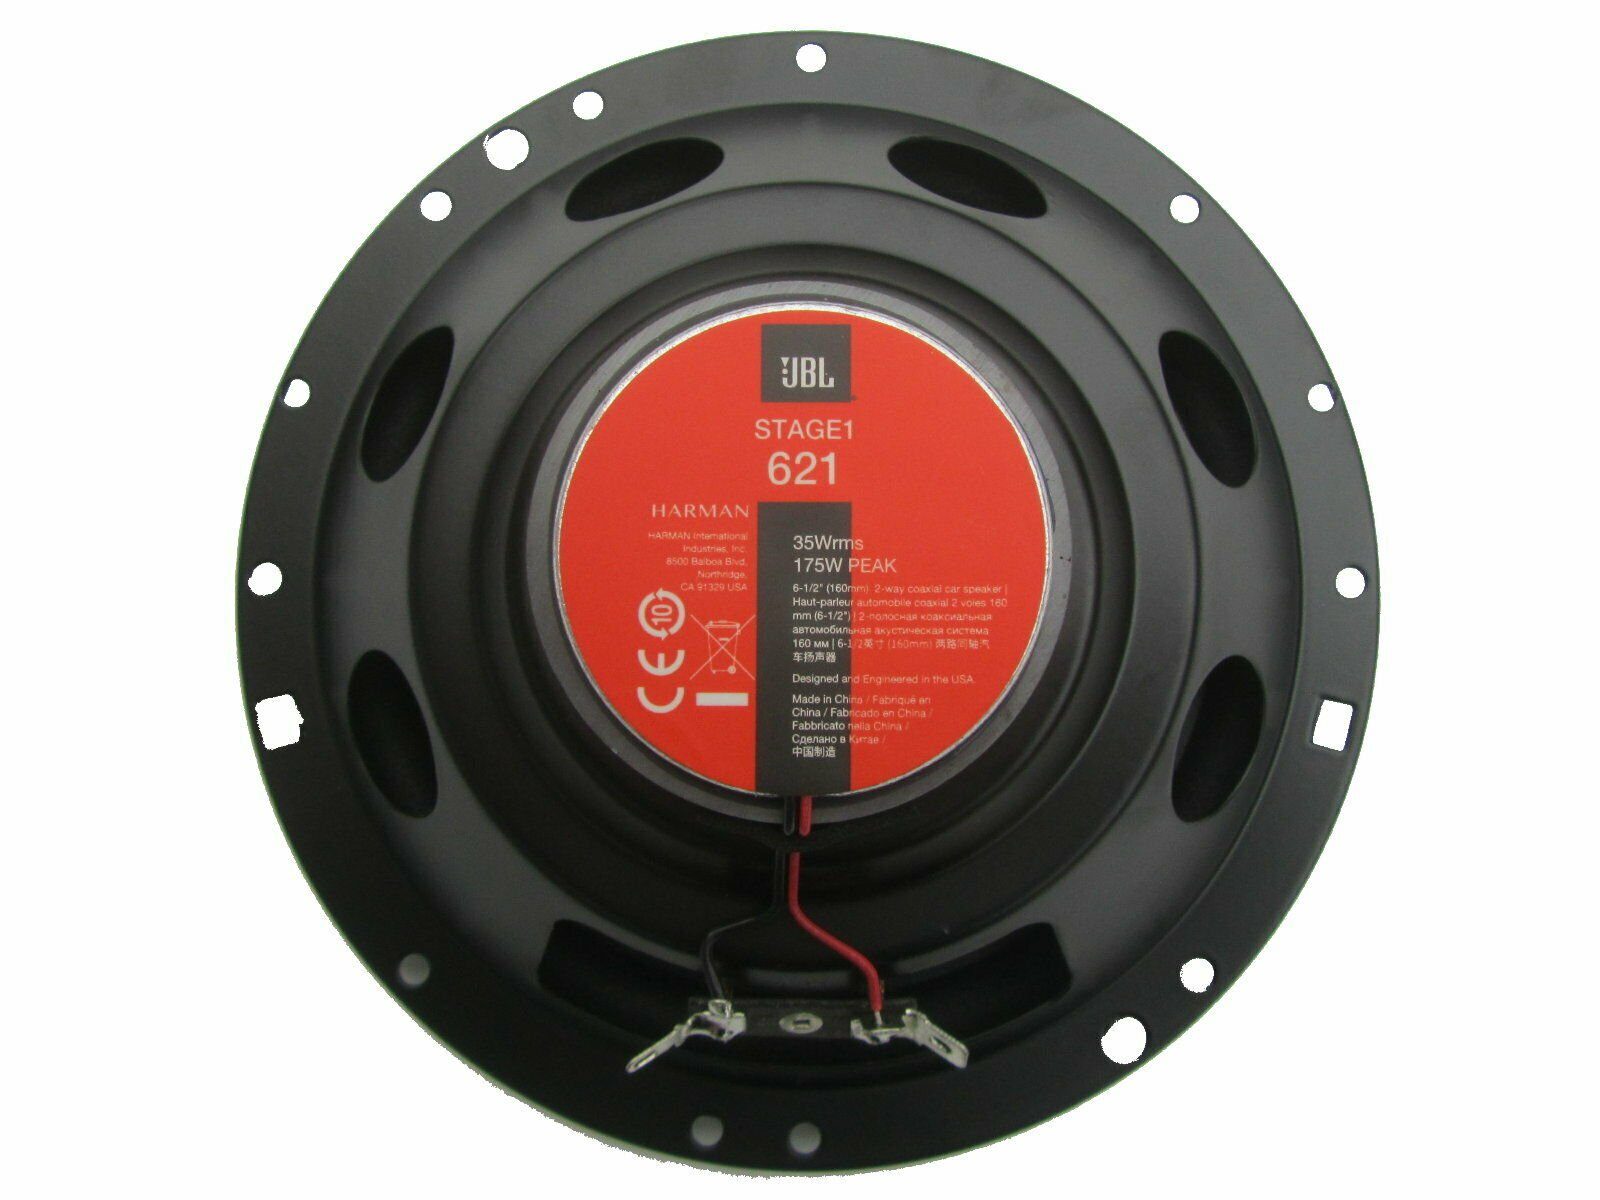 DSX JBL 2 3BG Passat W) Wege Auto-Lautsprecher Lautsprecher B5 3B für Bj VW (35